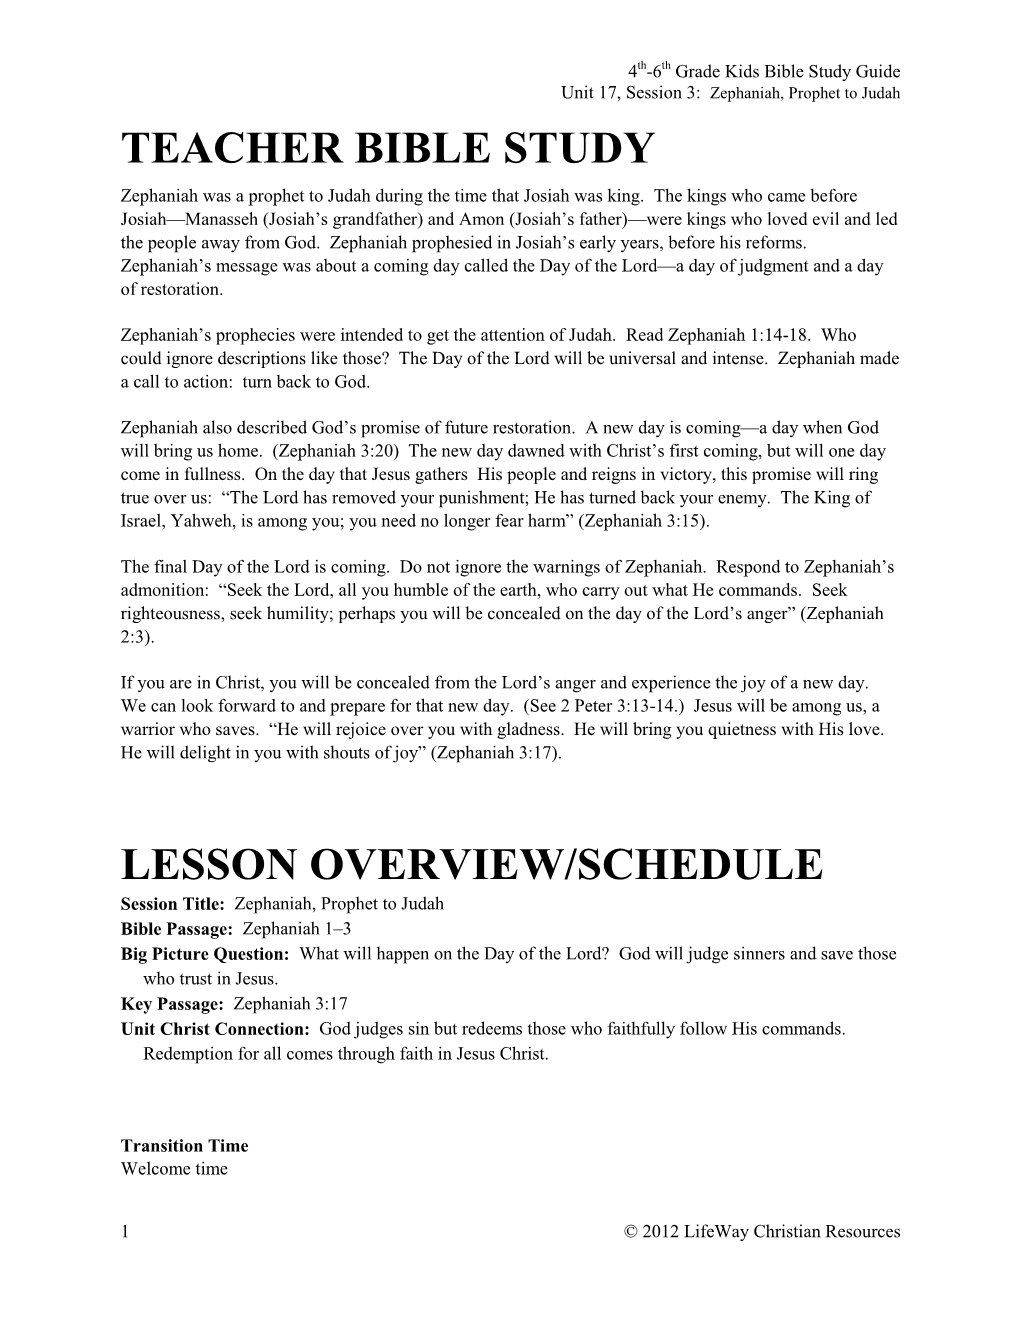 Teacher Bible Study Lesson Overview